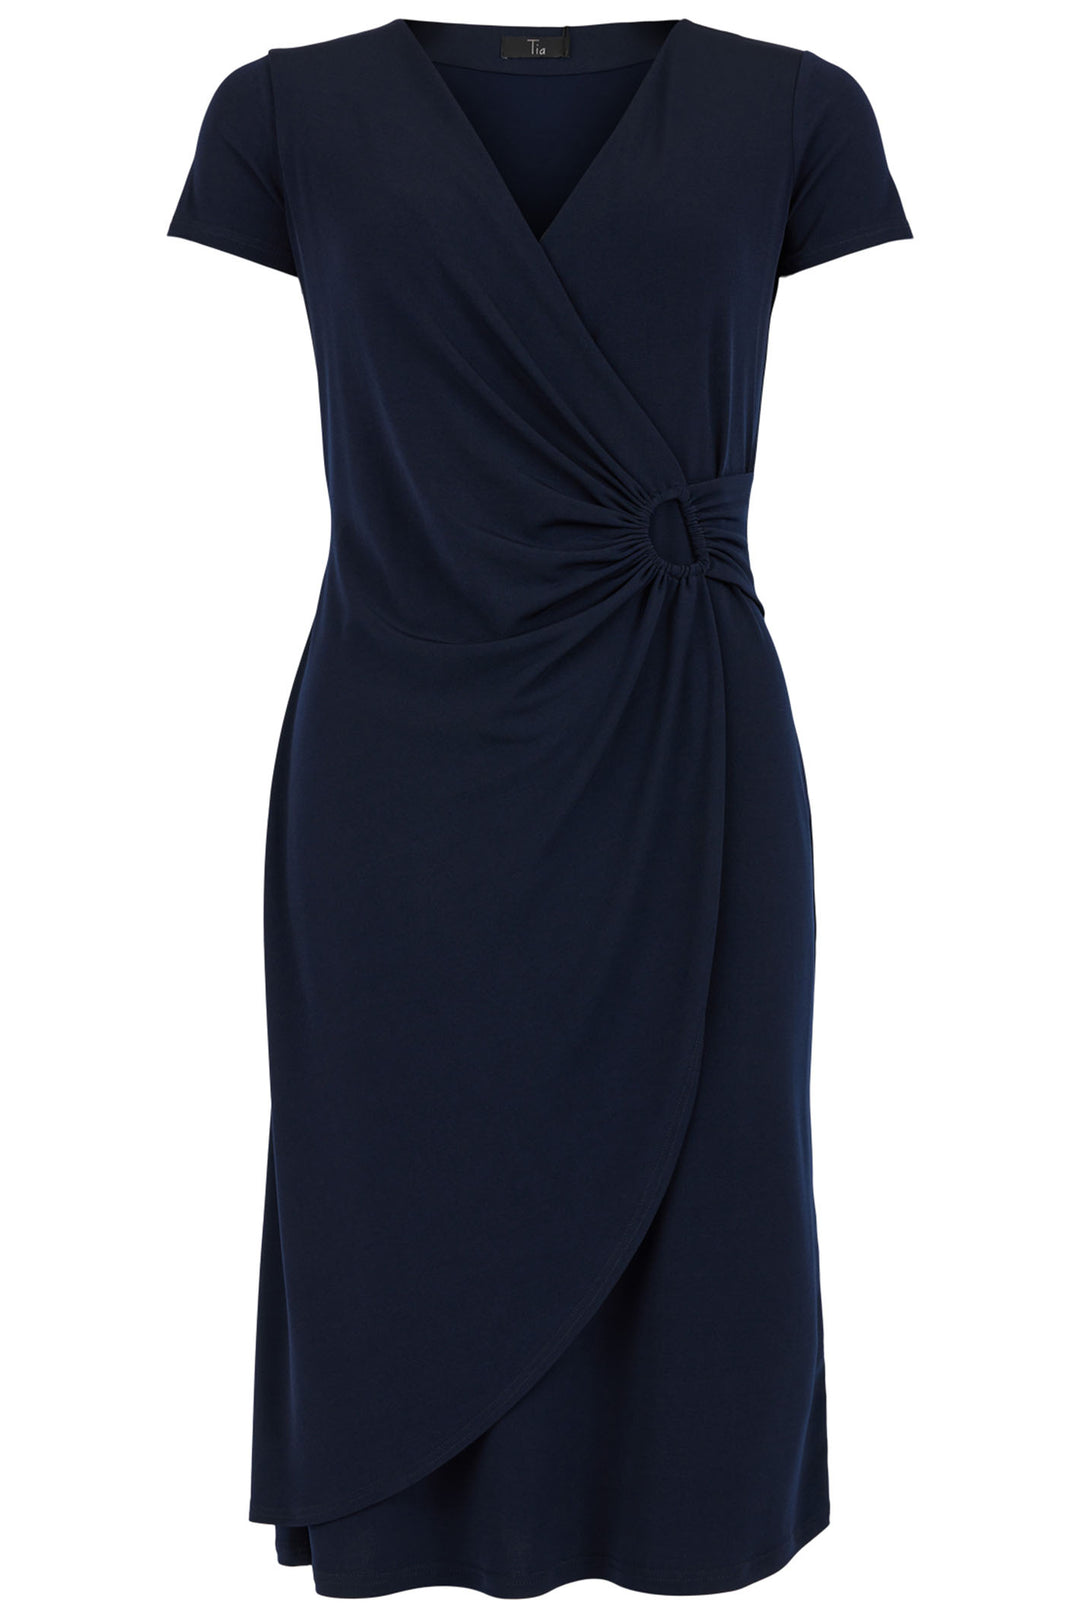 Tia London 78774 6903 Navy Wrap Style Dress - Experience Boutique